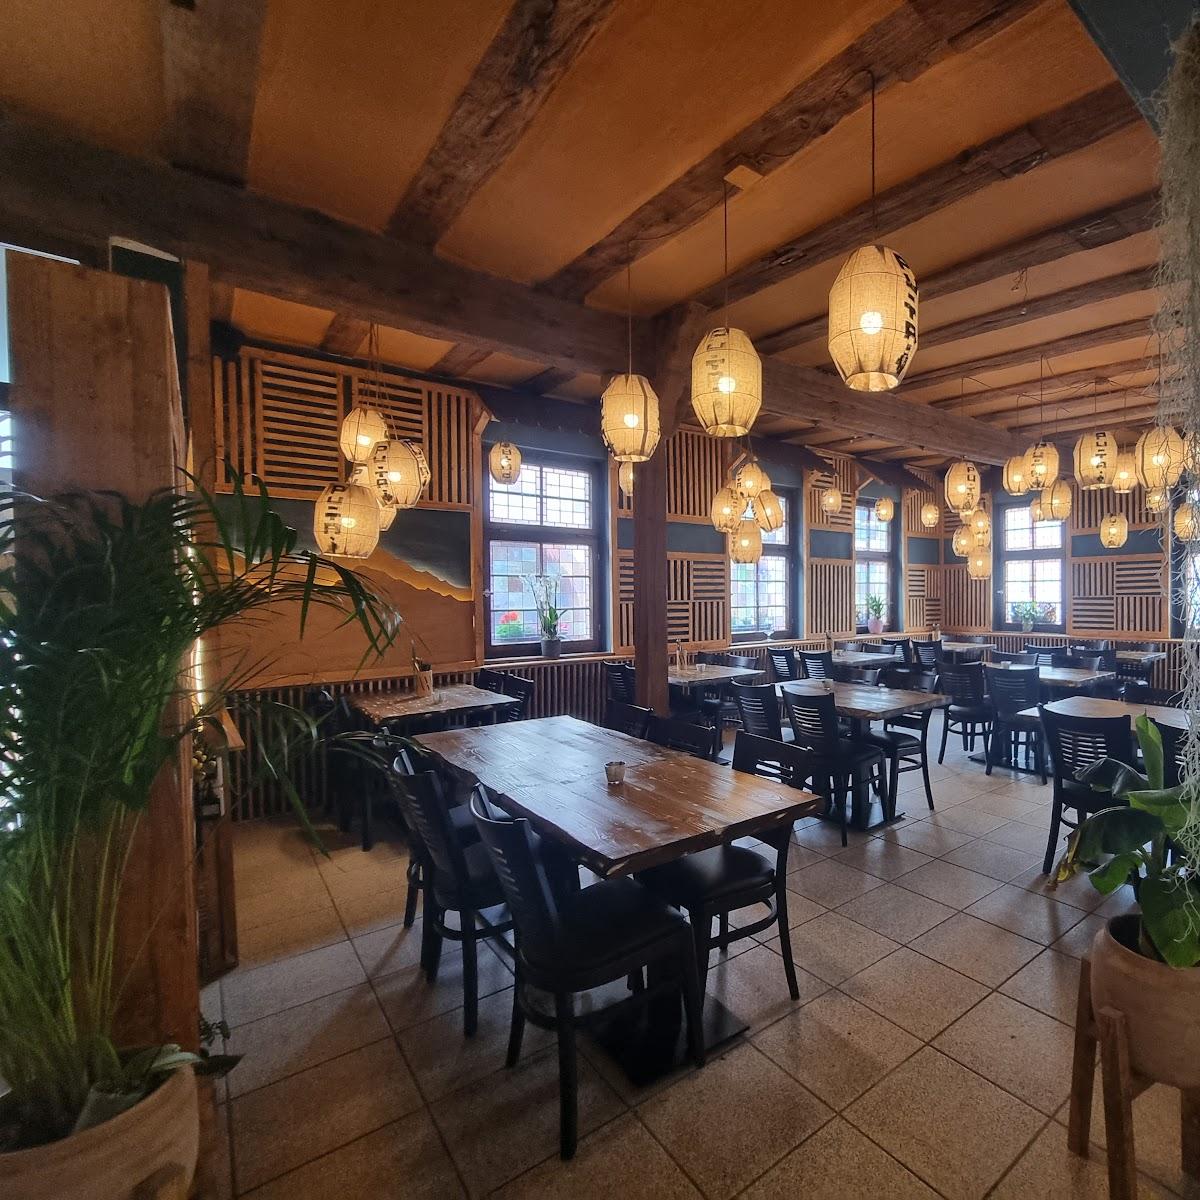 Restaurant "Pu-Tai im Blauen Haus" in Otterberg